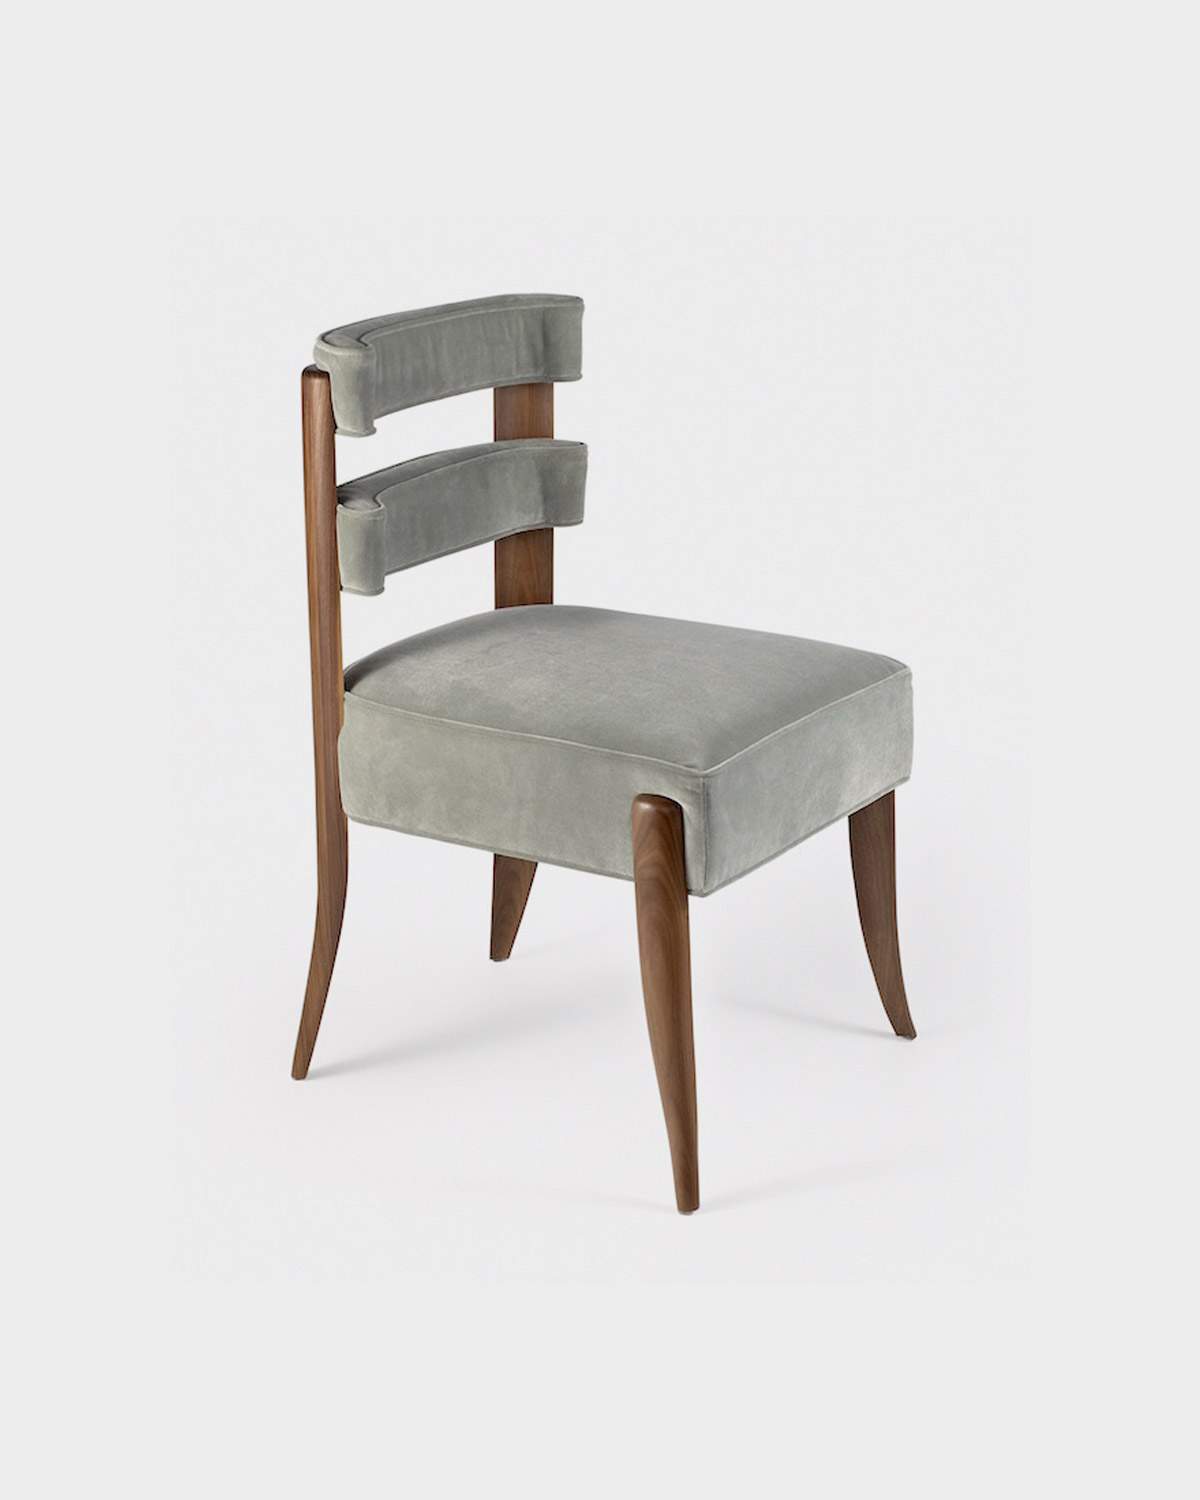 The Paolo Side Dining Chair by Studio Van den Akker